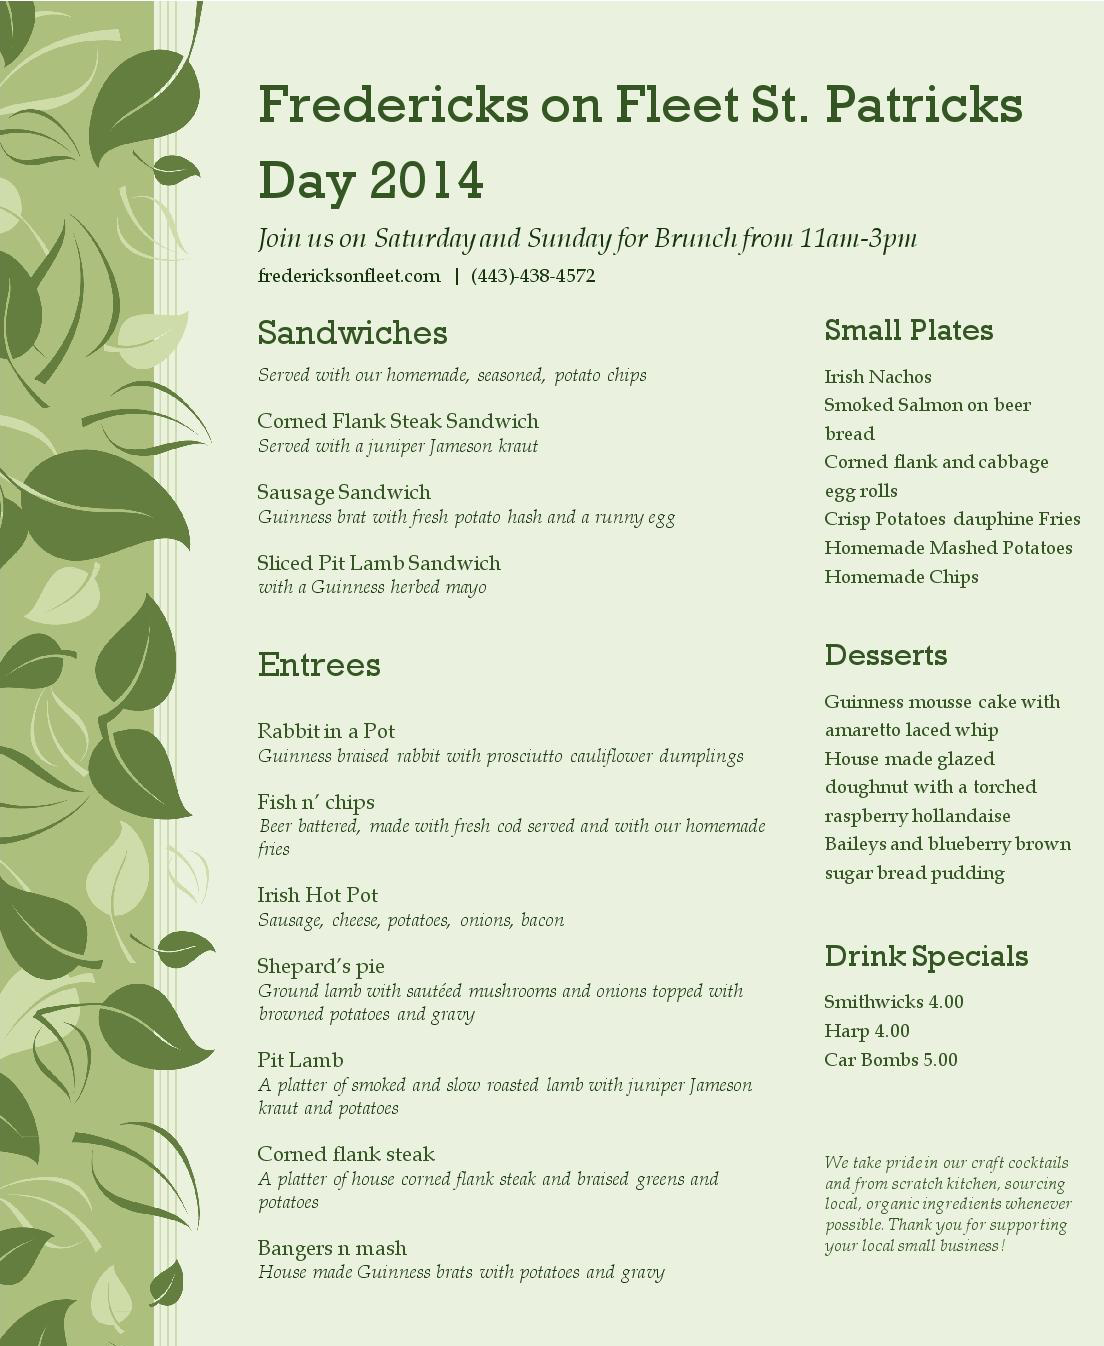 St Patricks Day st. patricks day preakness menu wedding menu menu design